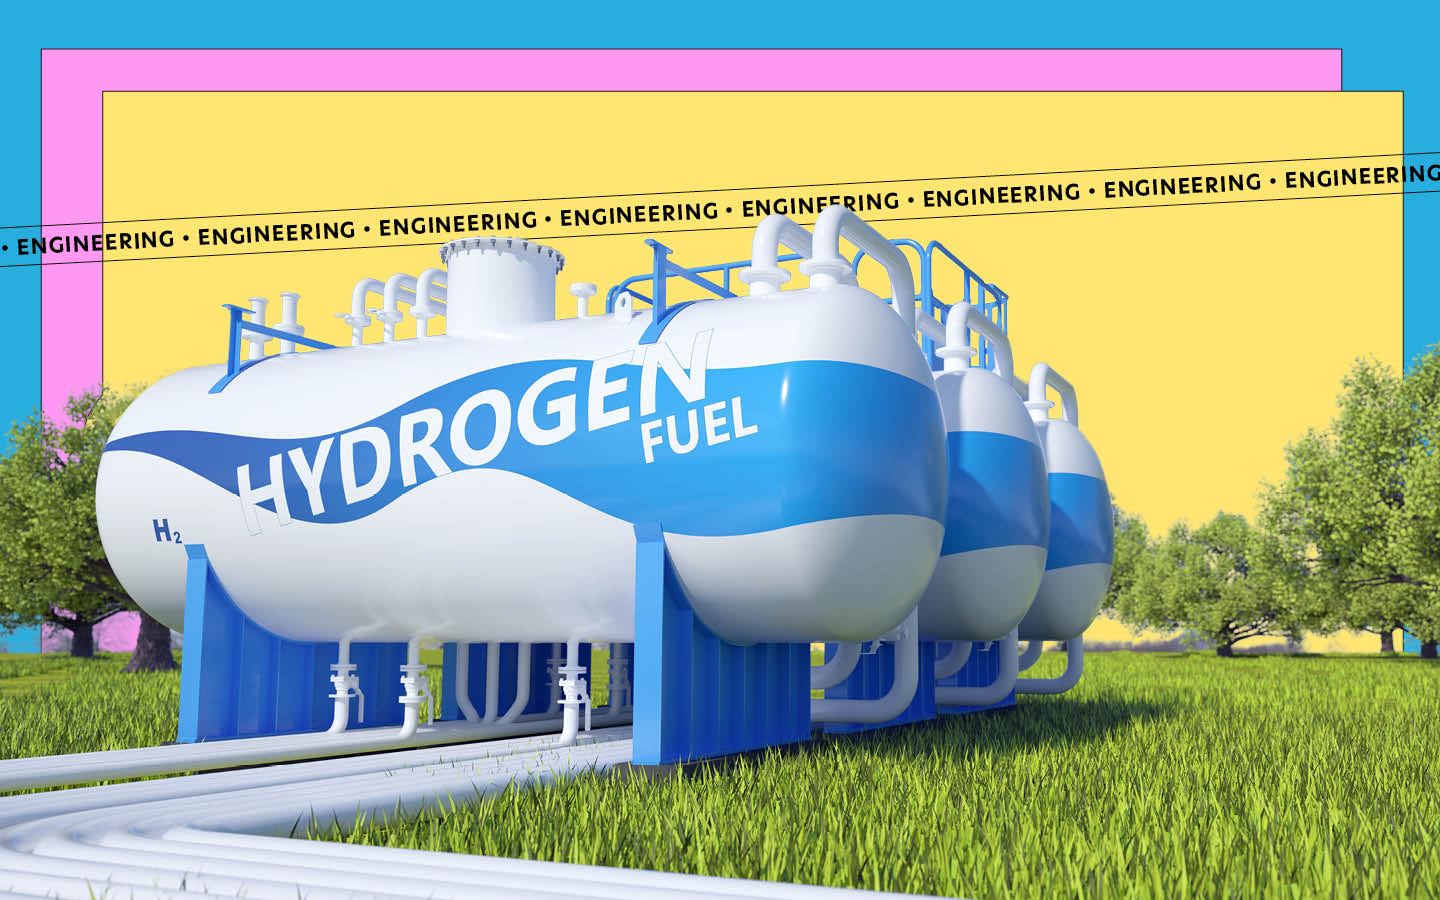 an illustration of hydrogen tanks